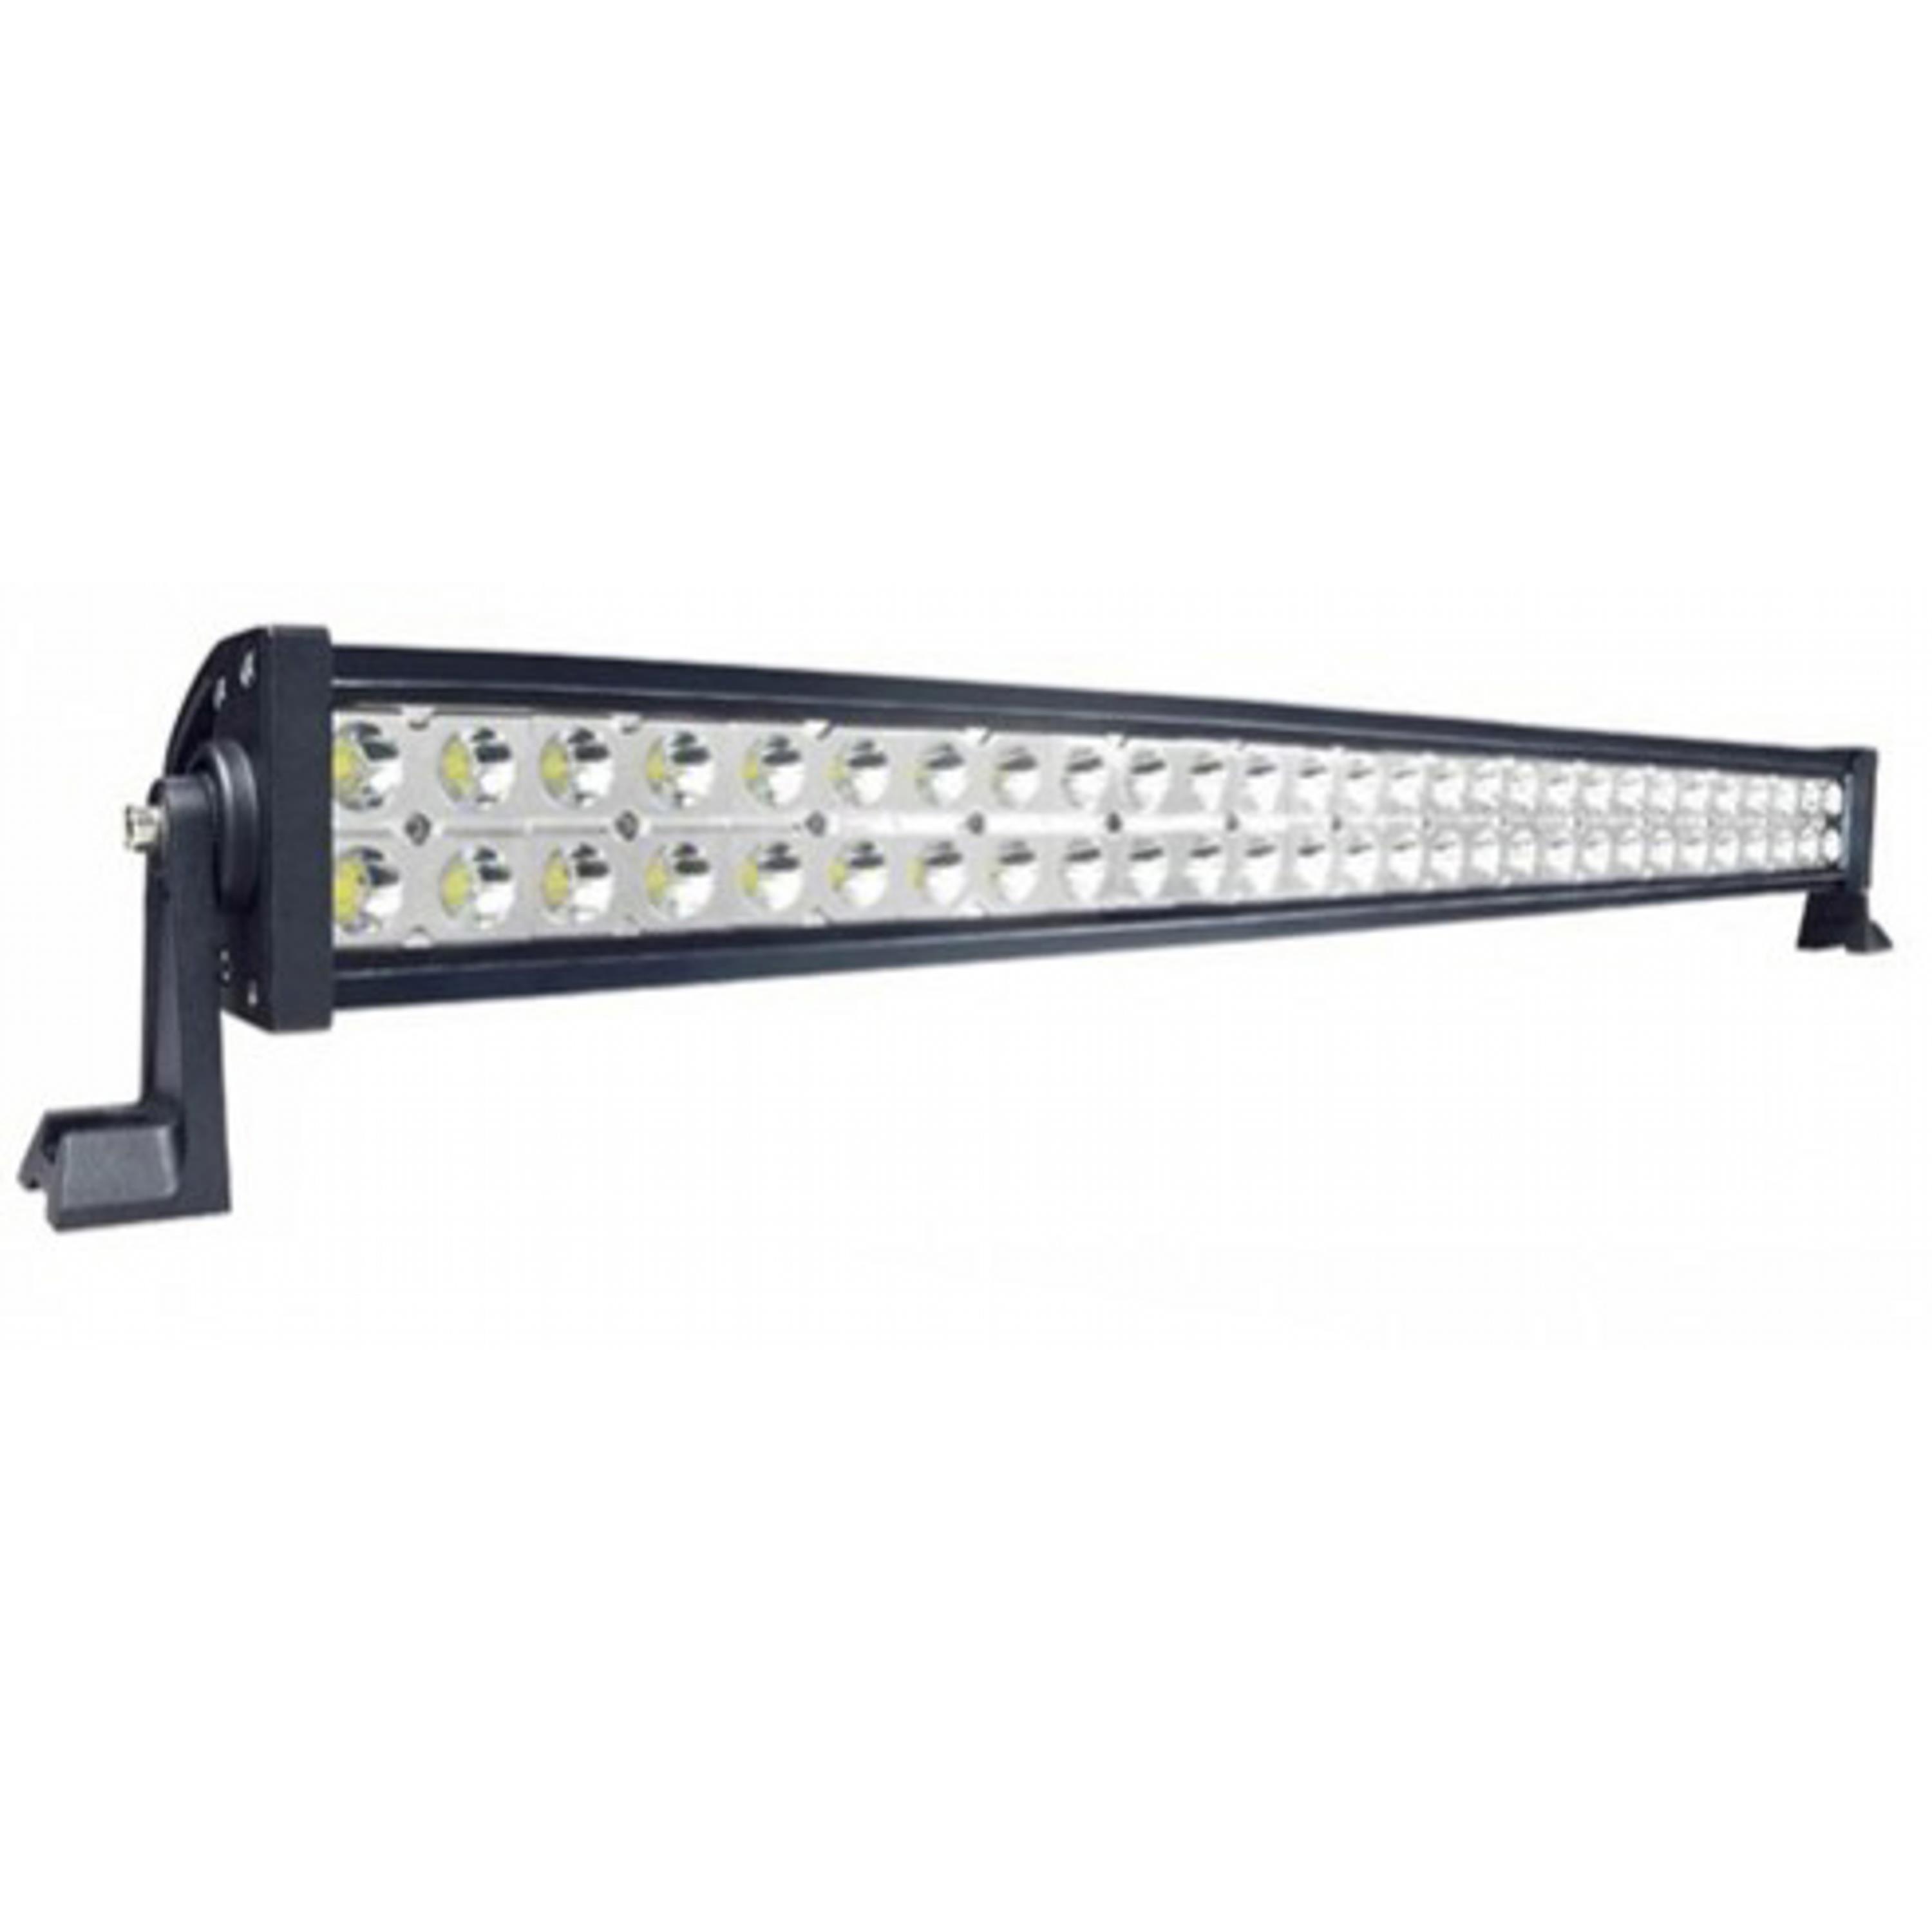 CREE LED 50 Inch Flood/Spot Combo Bar Light, 21120 Lumens